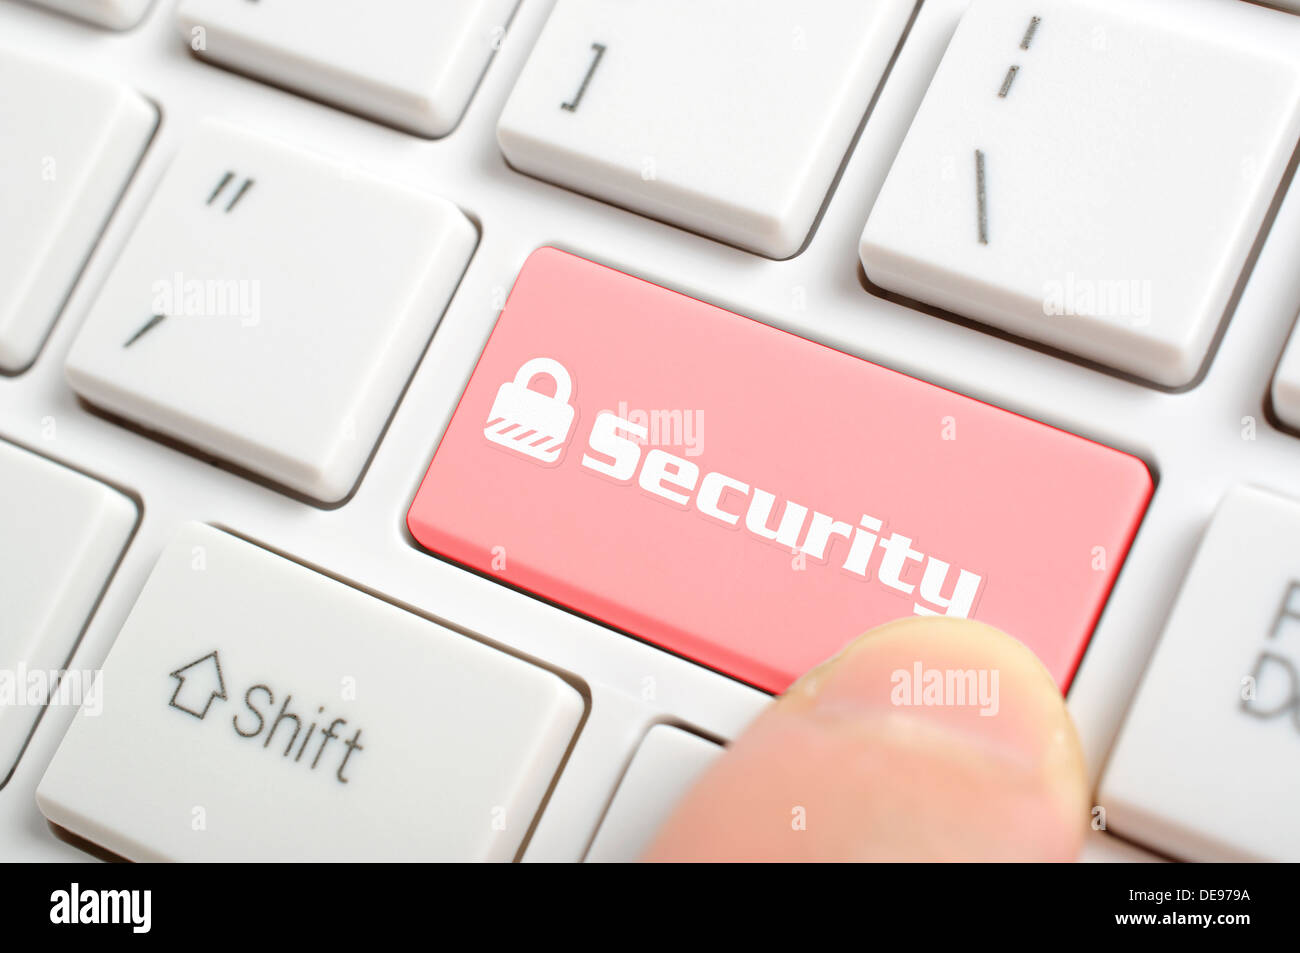 Pressing security key on keyboard Stock Photo